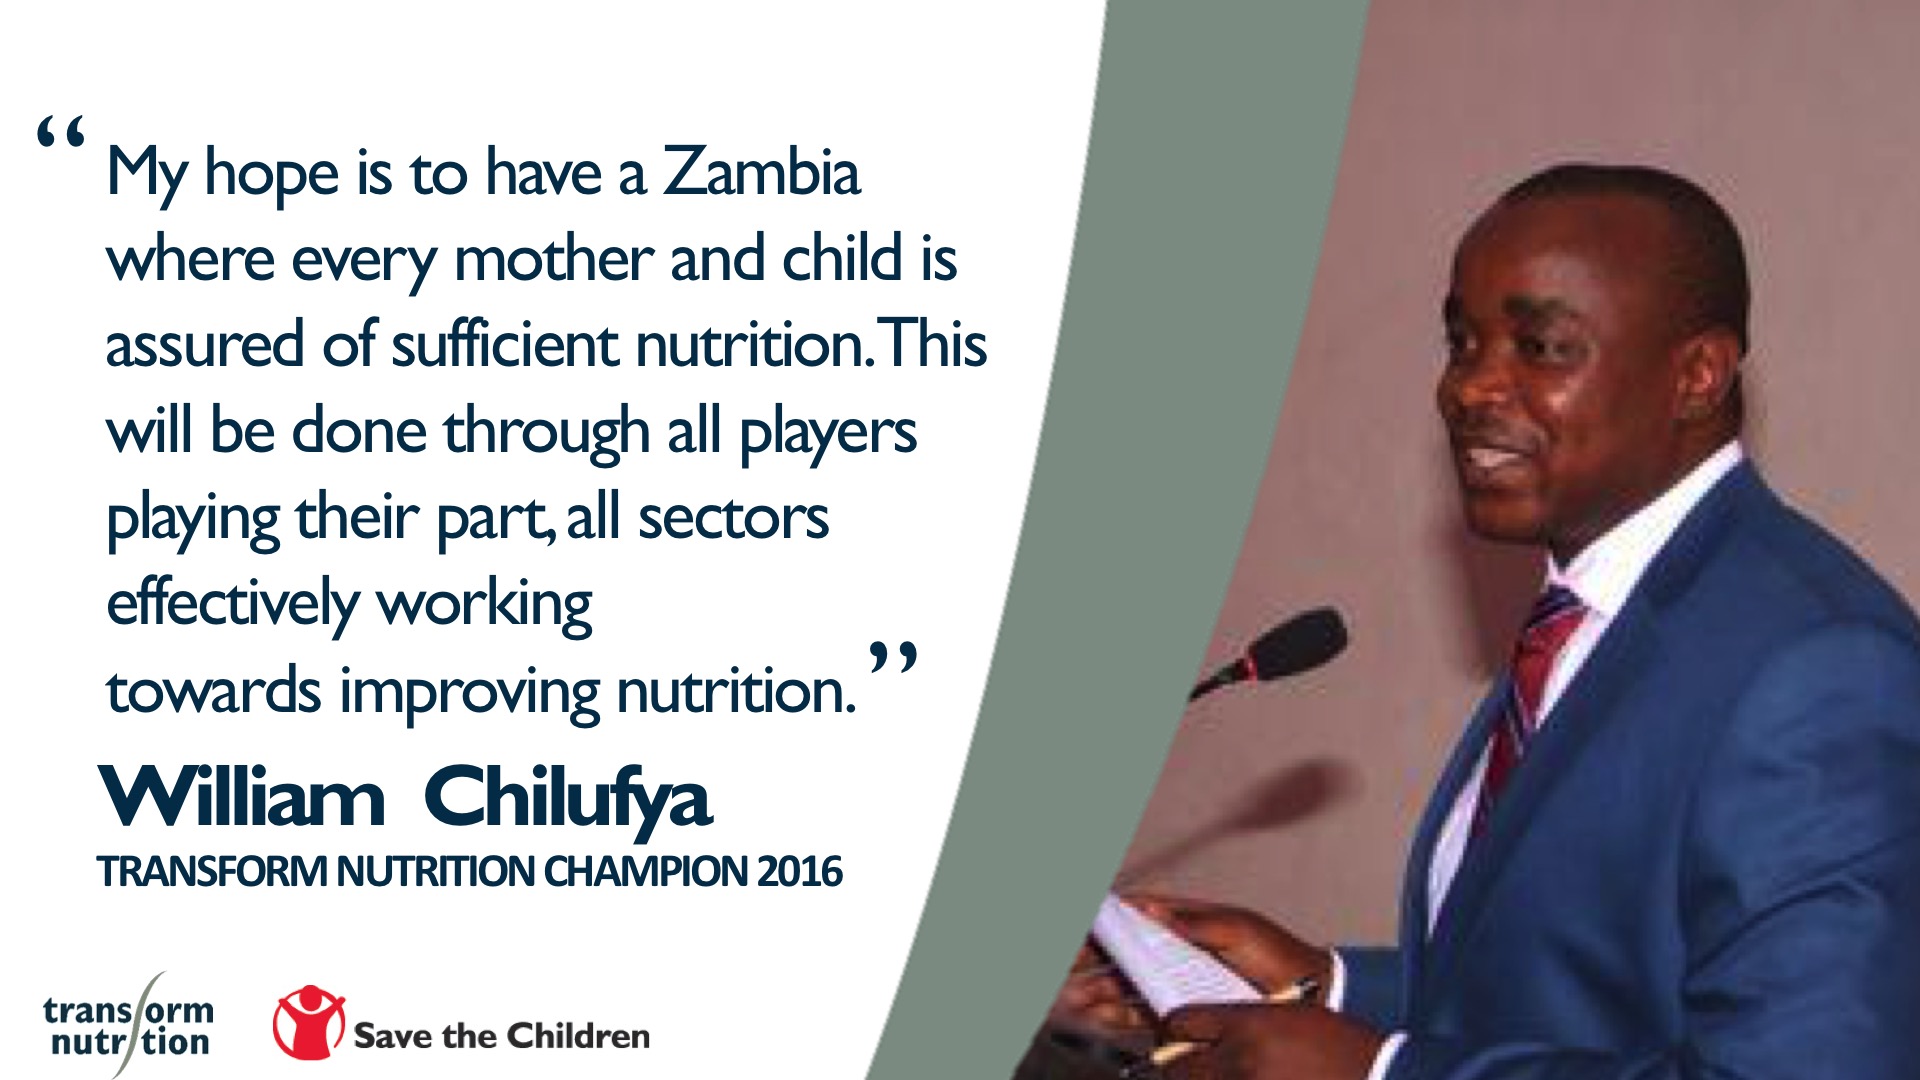 William Chilufya of Zambia – 2016 Transform Nutrition Champion